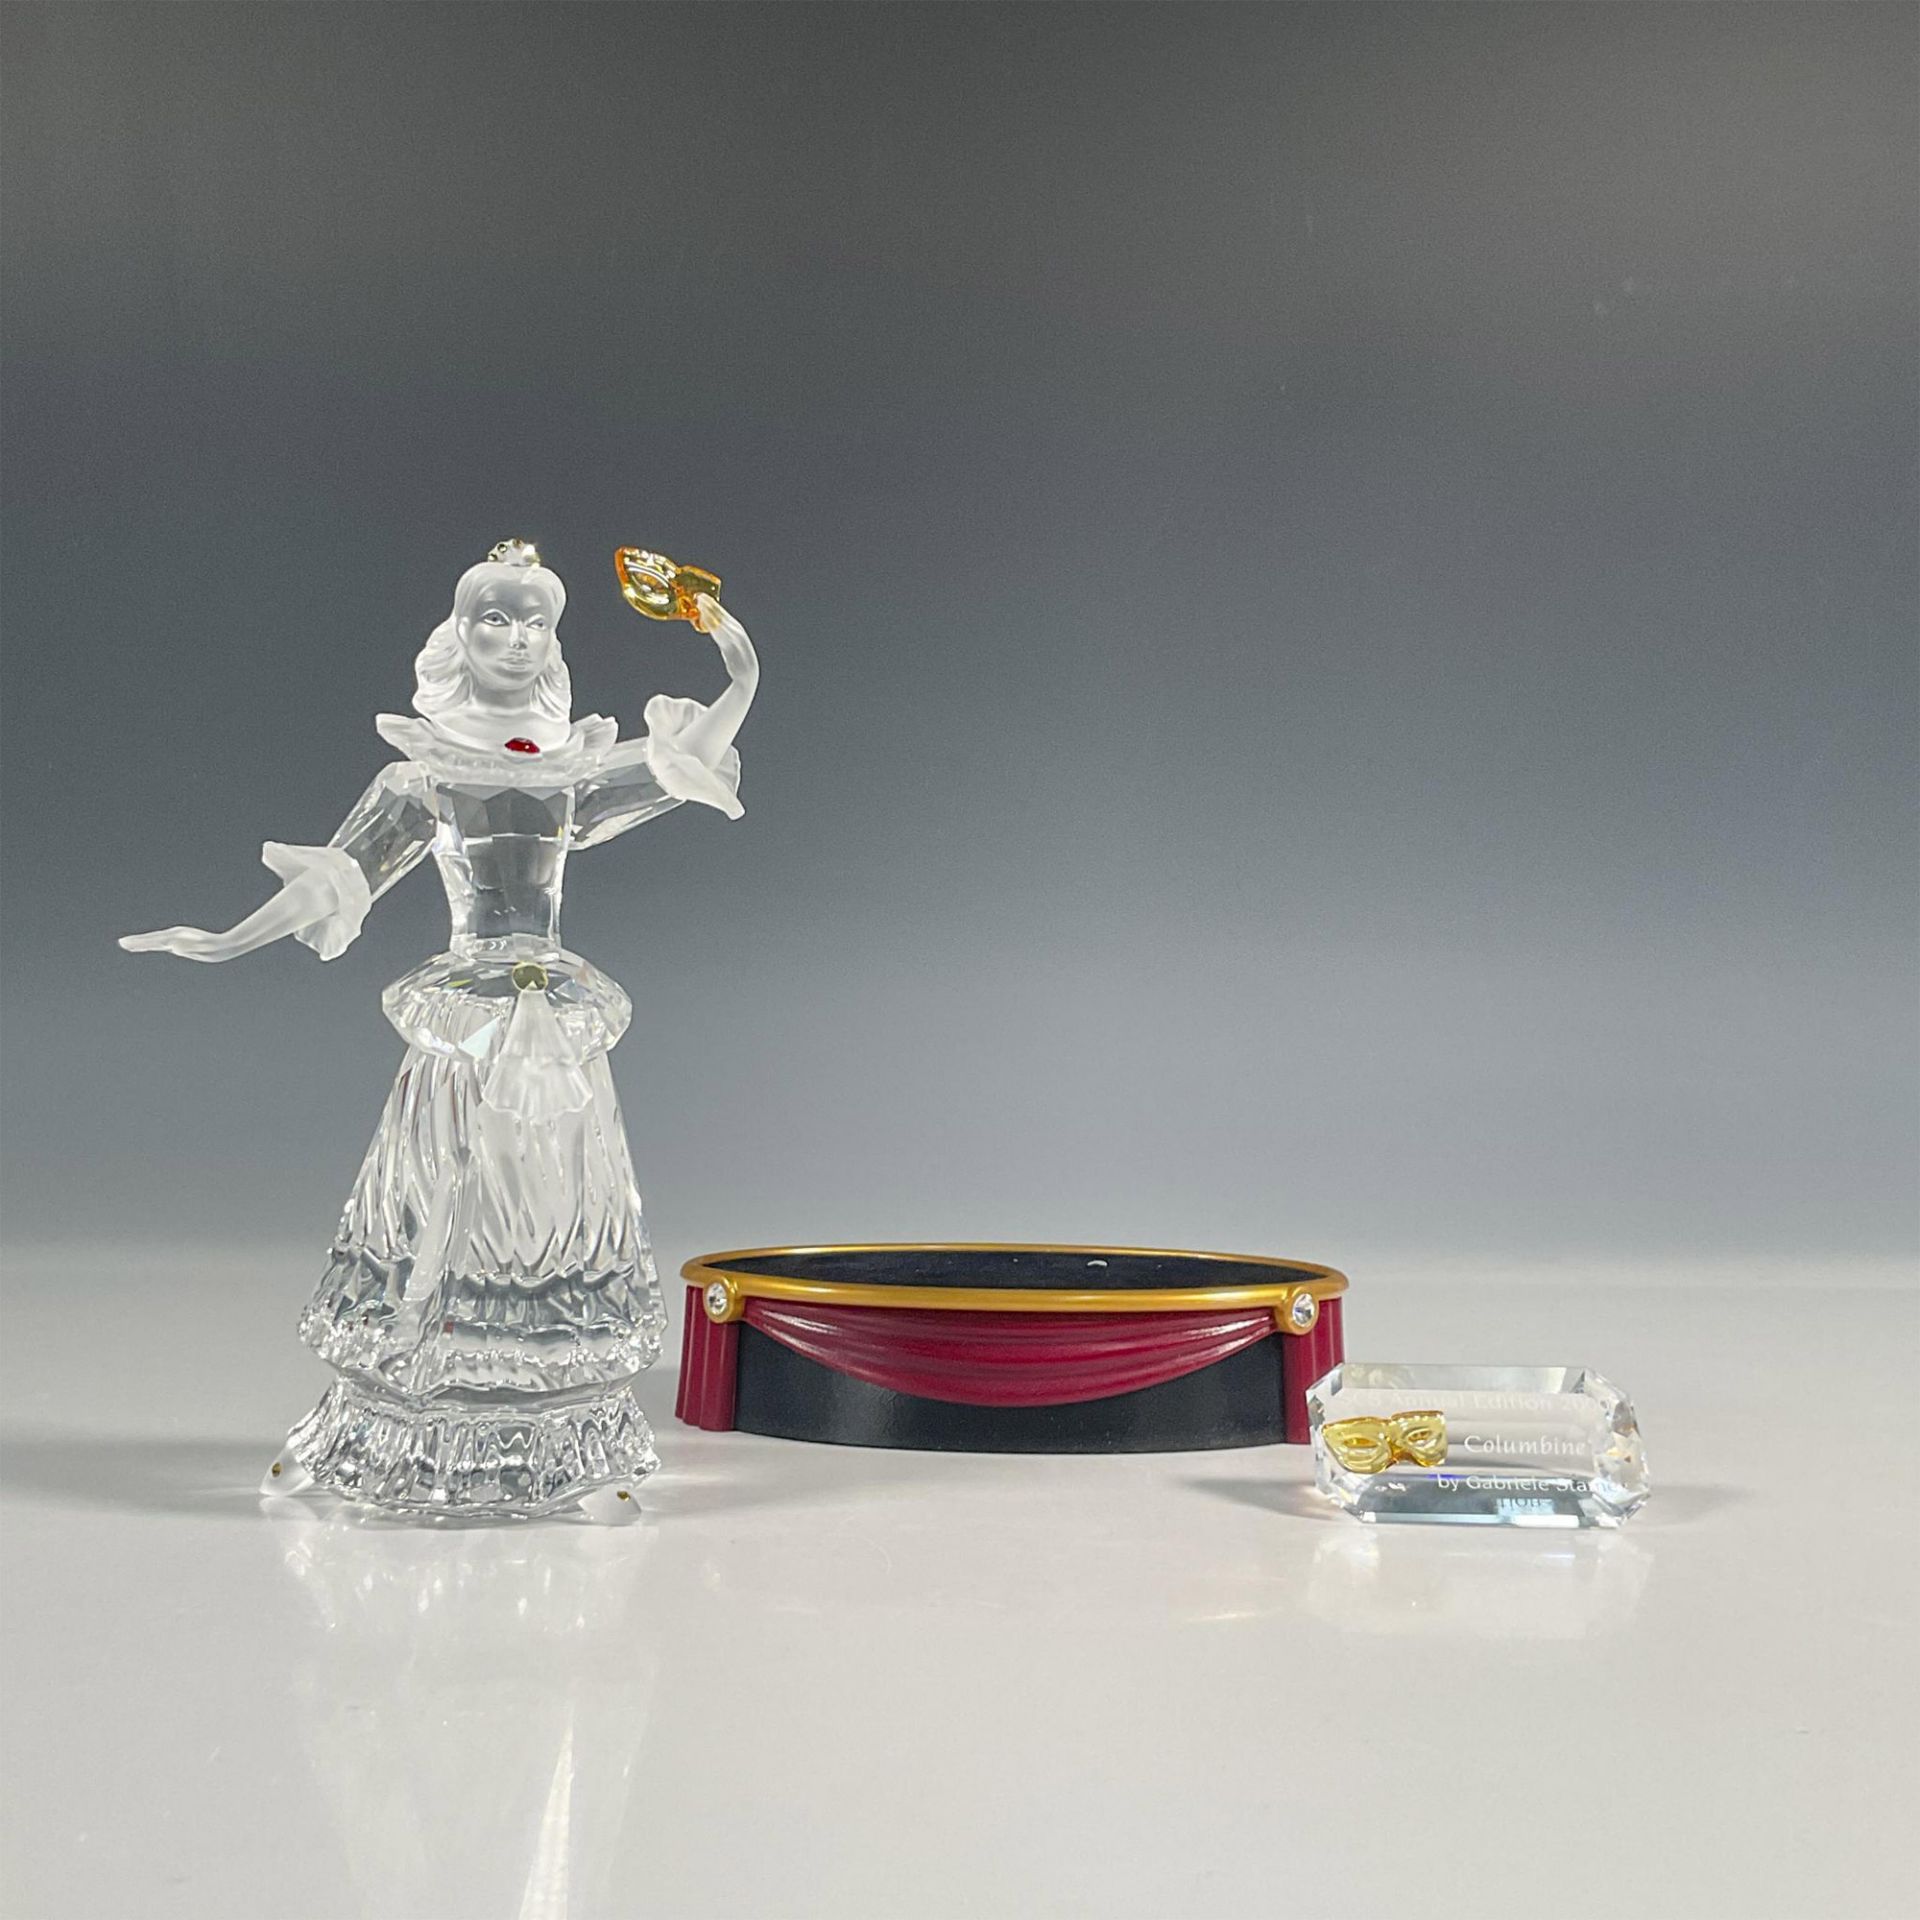 3pc Swarovski Crystal Figurine and Accessories, Columbine